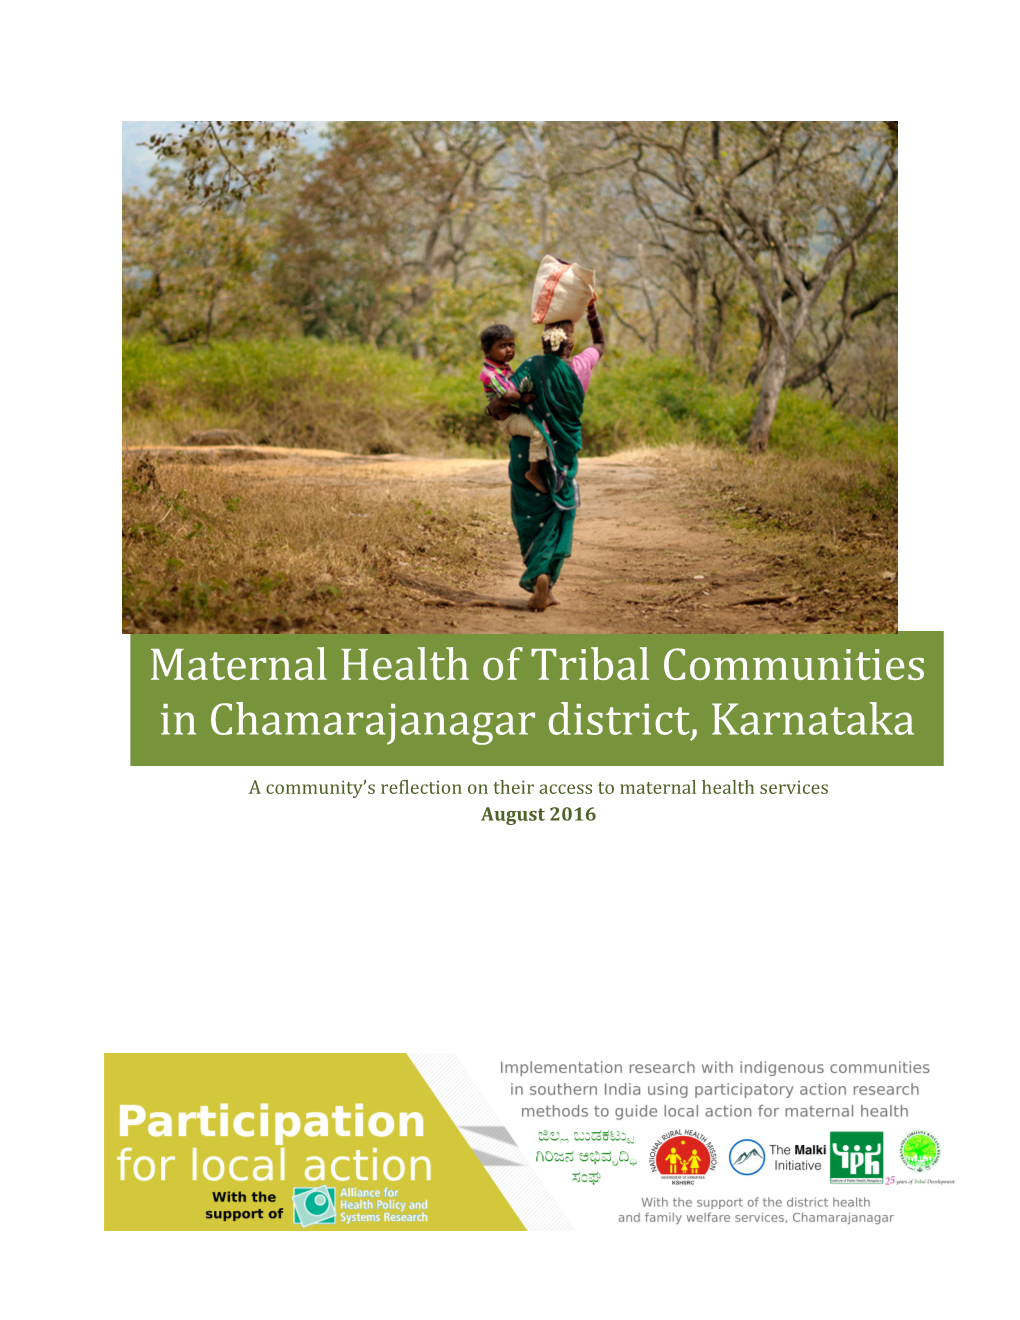 Maternal Health of Tribal Communities in Chamarajanagar District, Karnataka